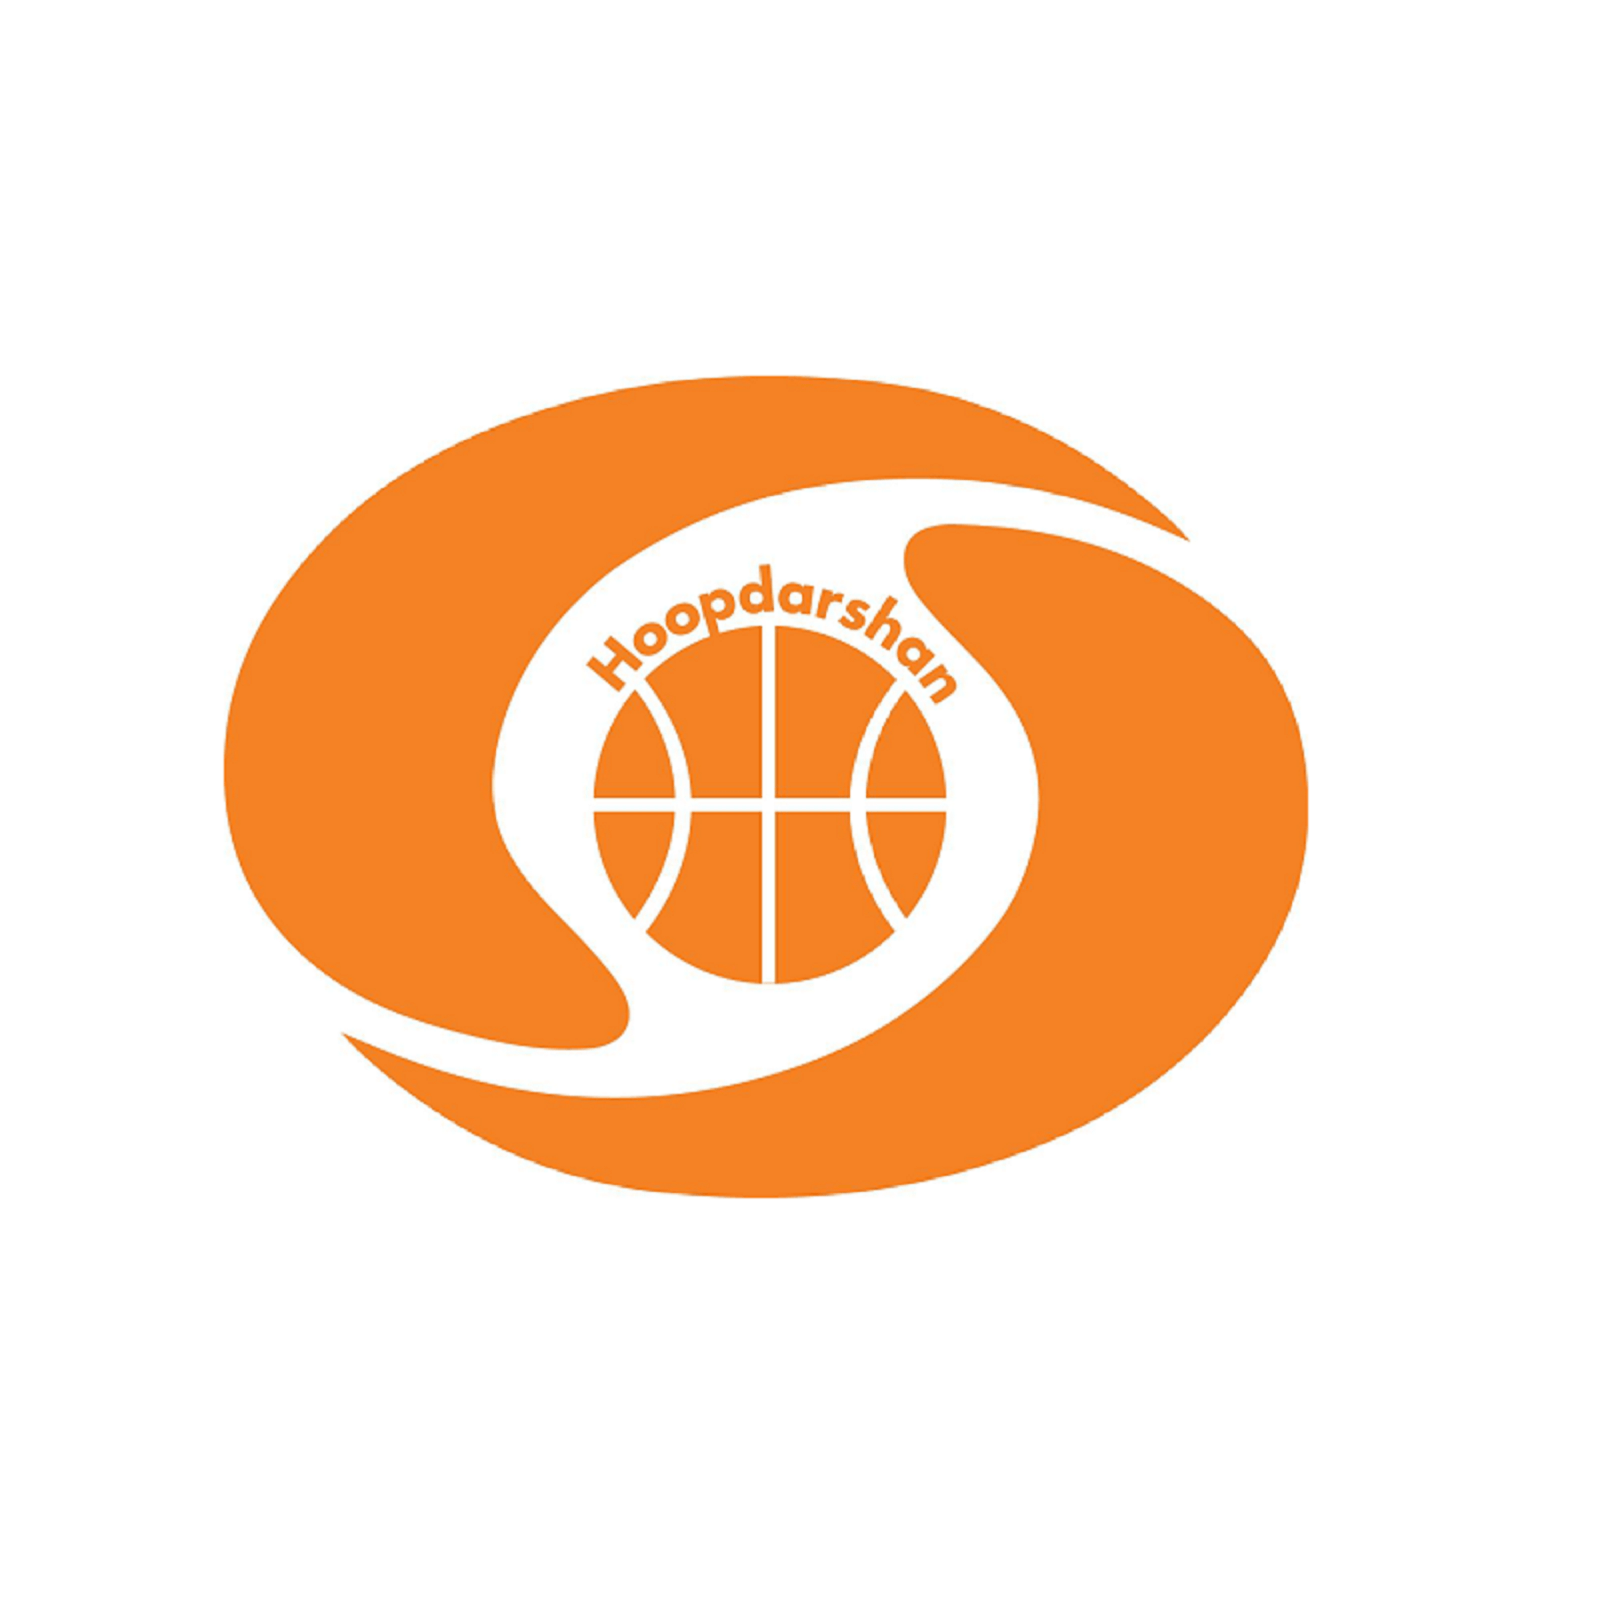 Crane Orange Circle Logo - Hoopdarshan Episode 36: State of the UBA Basketball League with Paul